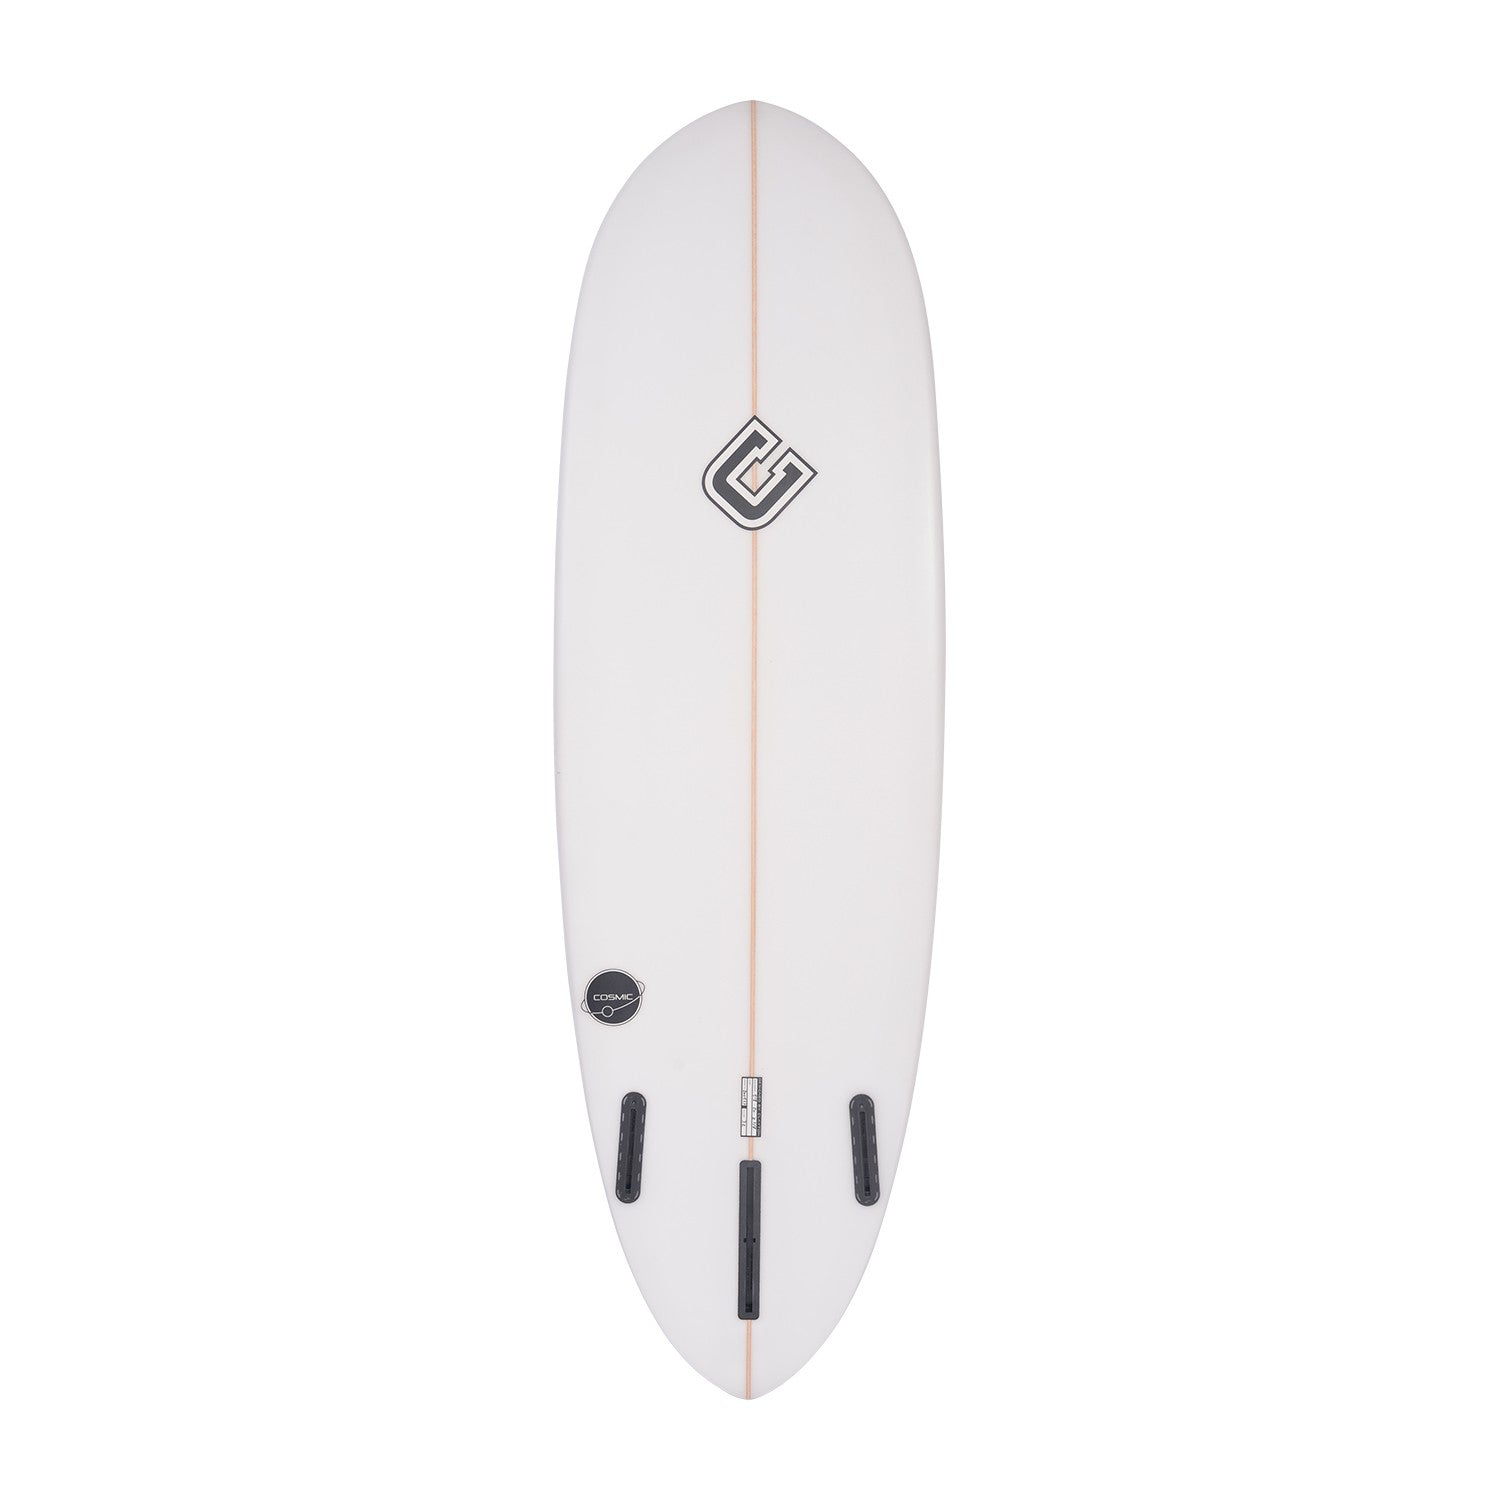 CLAYTON Surfboards - Cosmic (PU) Futures - 5'10